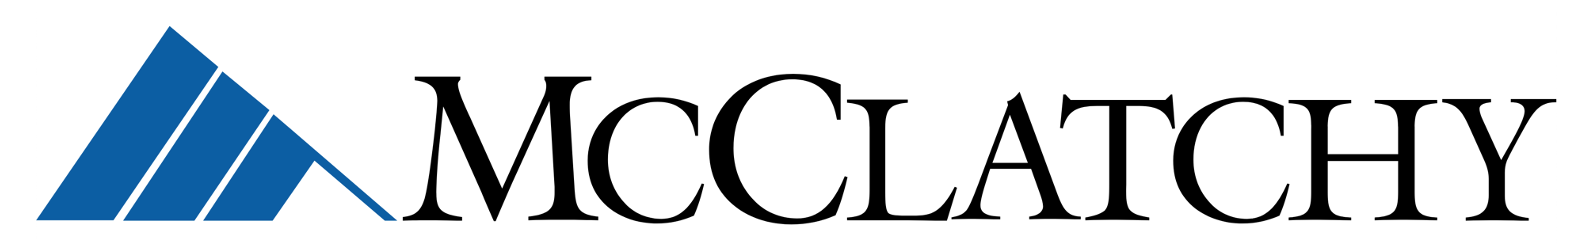 mcclatchy logo